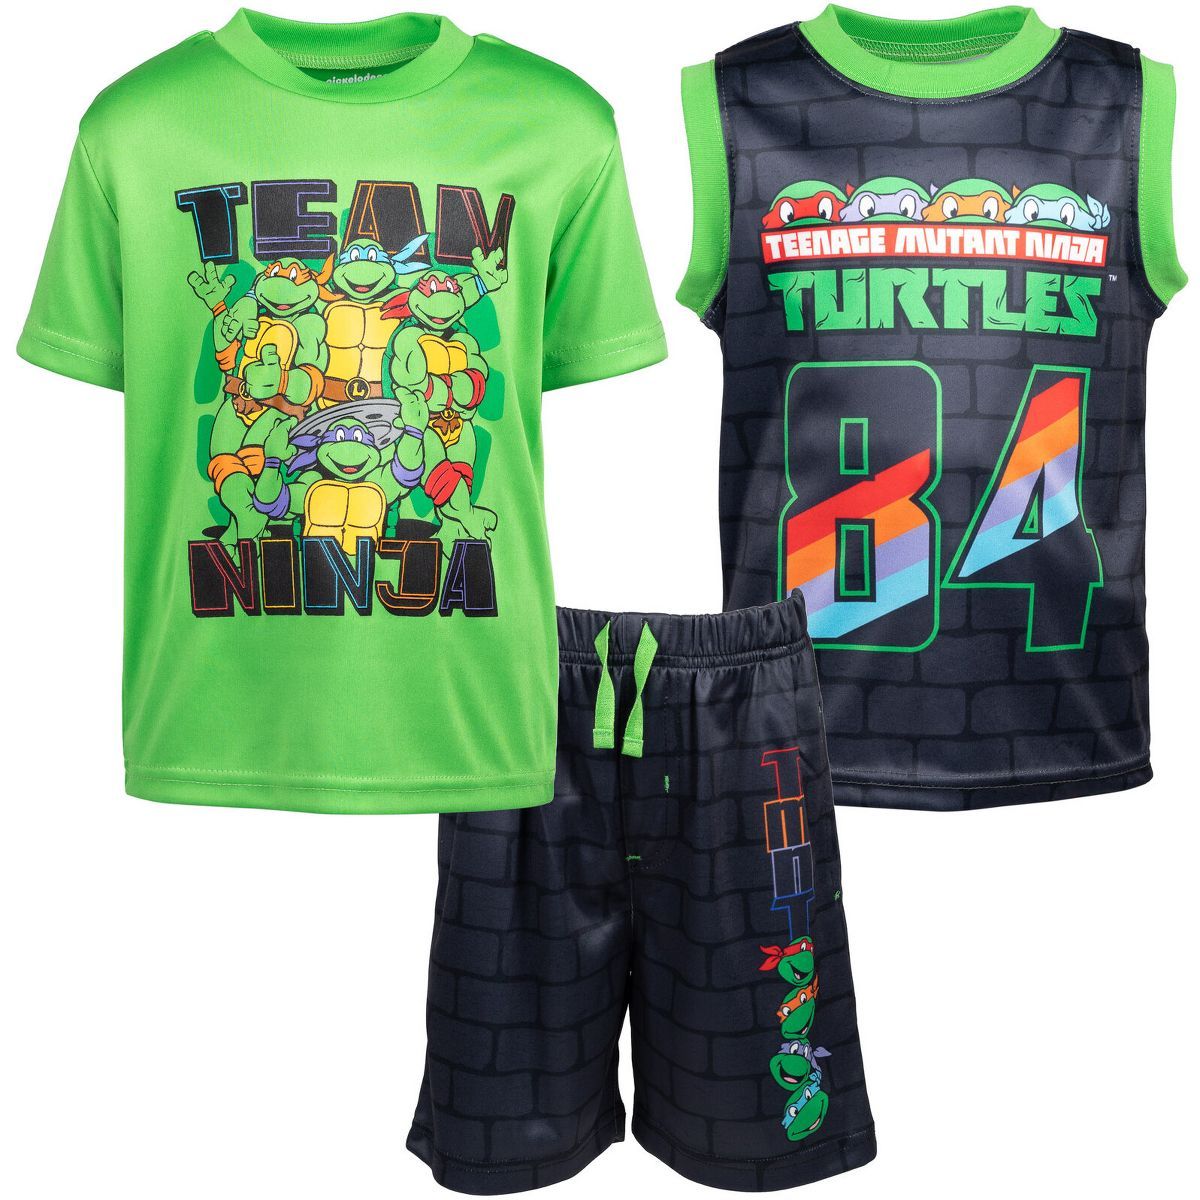 Teenage Mutant Ninja Turtles 3 Piece Outfit Set: T-Shirt Tank Top Shorts | Target